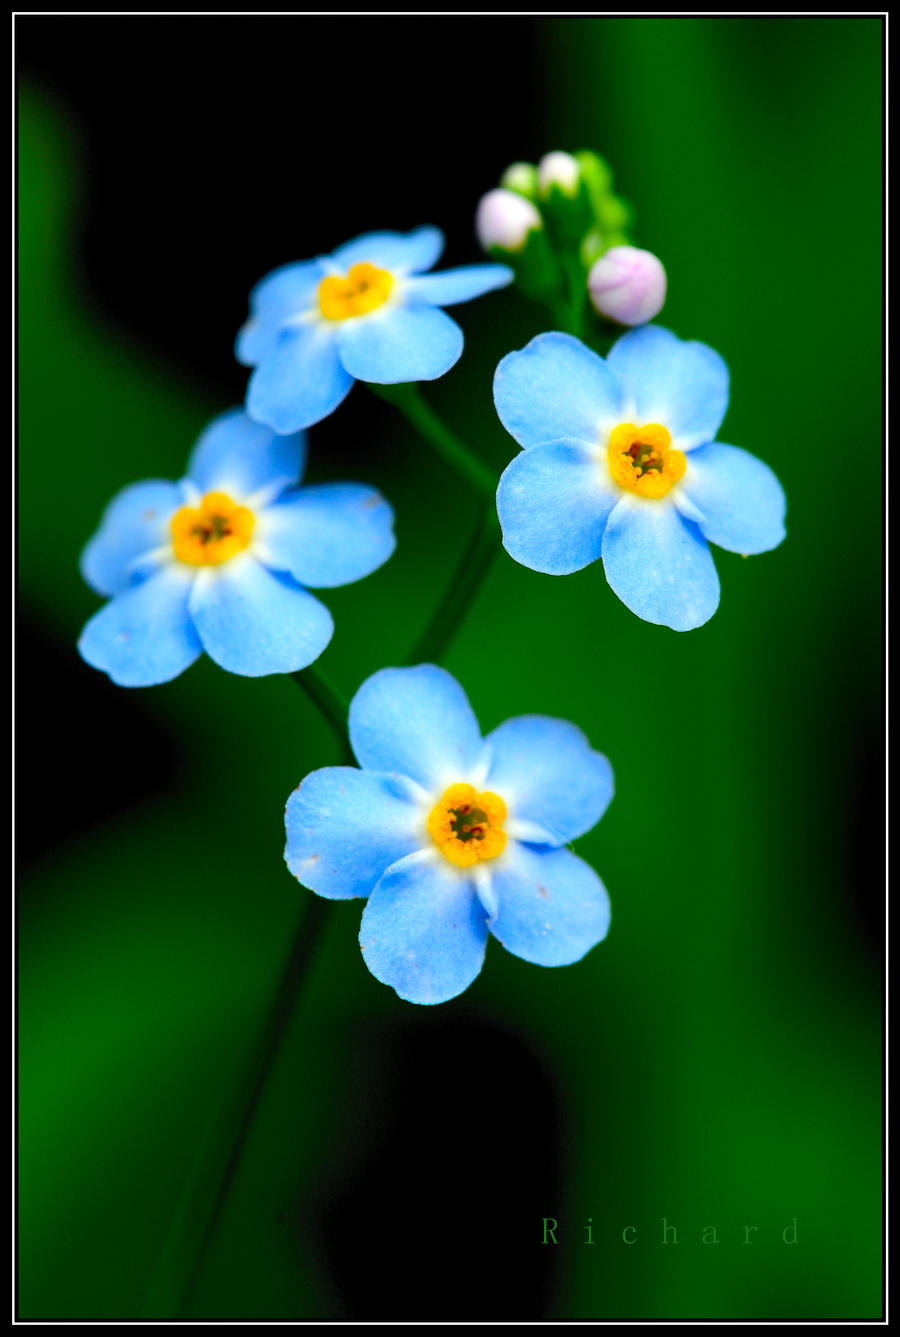 blue flower 2